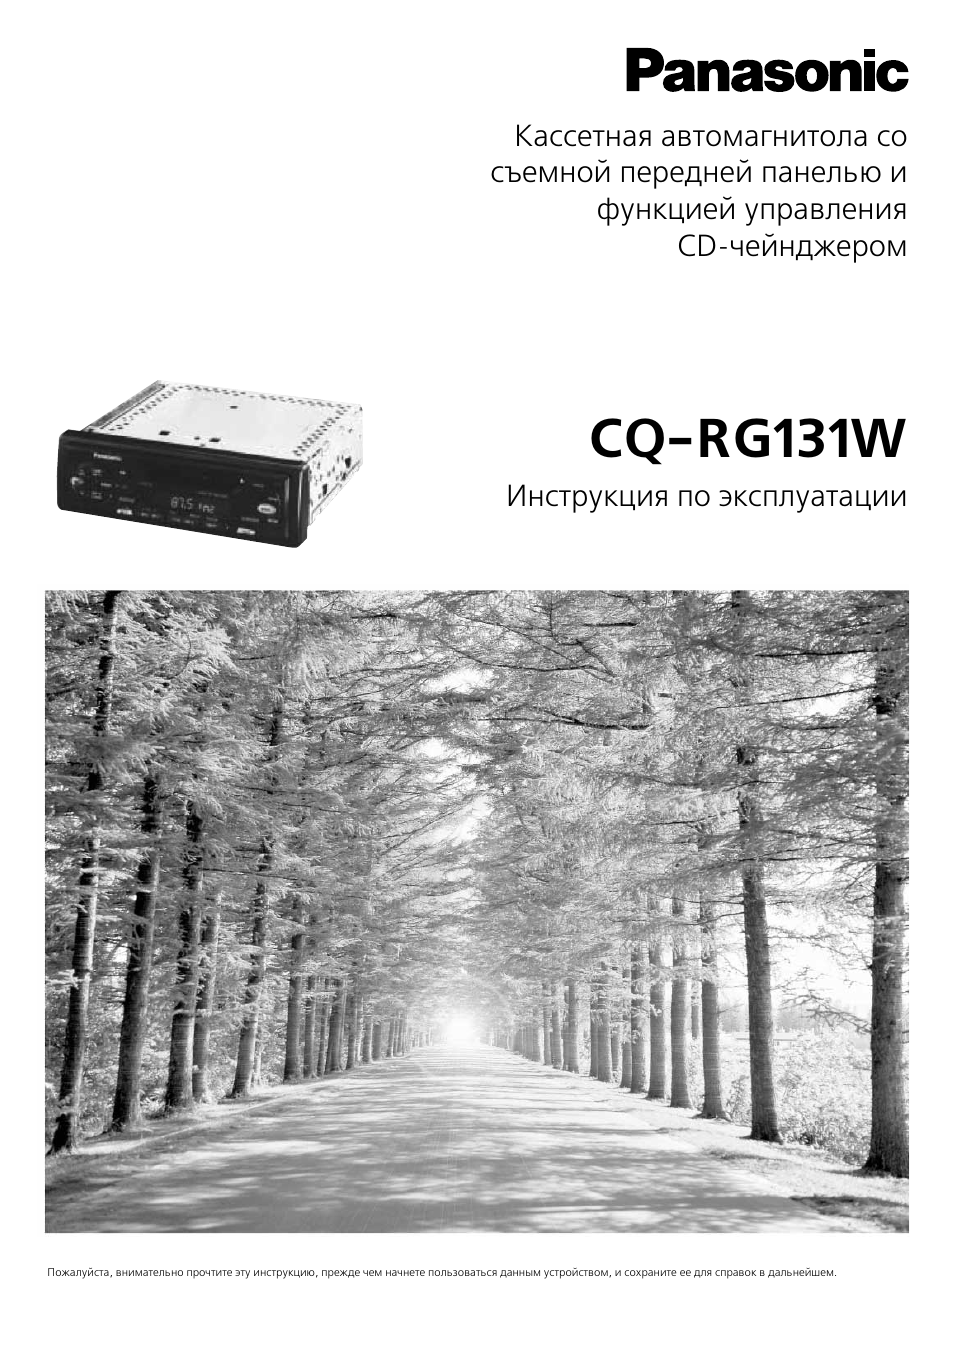 Инструкция по эксплуатации Panasonic CQ-RG131W | 21 cтраница